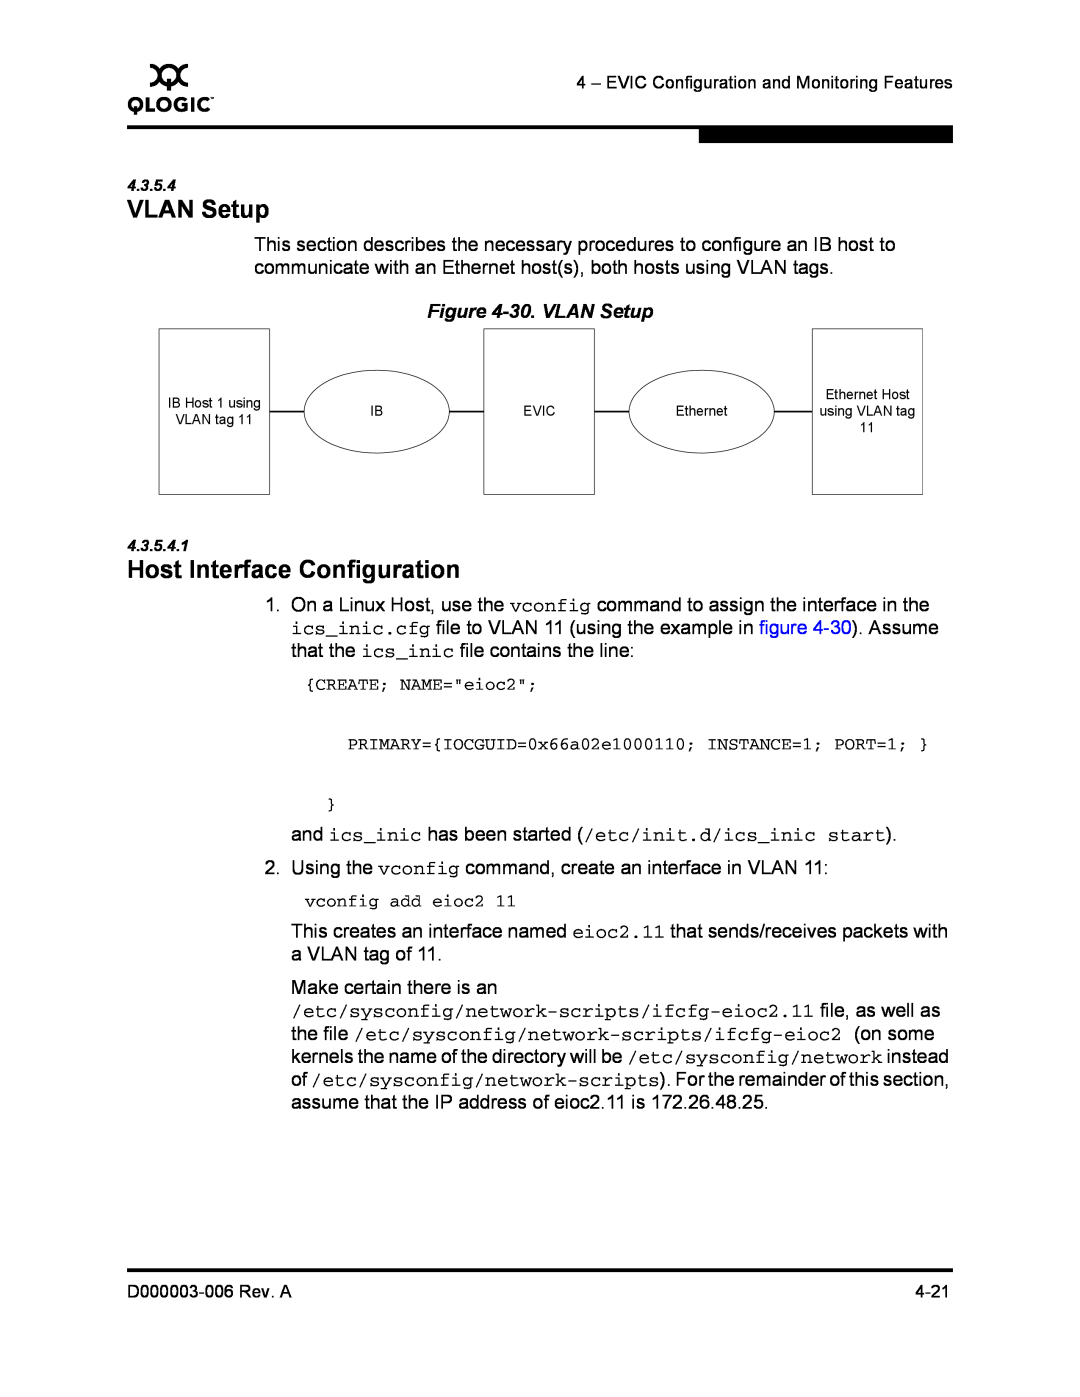 Q-Logic 9000 manual Host Interface Configuration, 30. VLAN Setup 